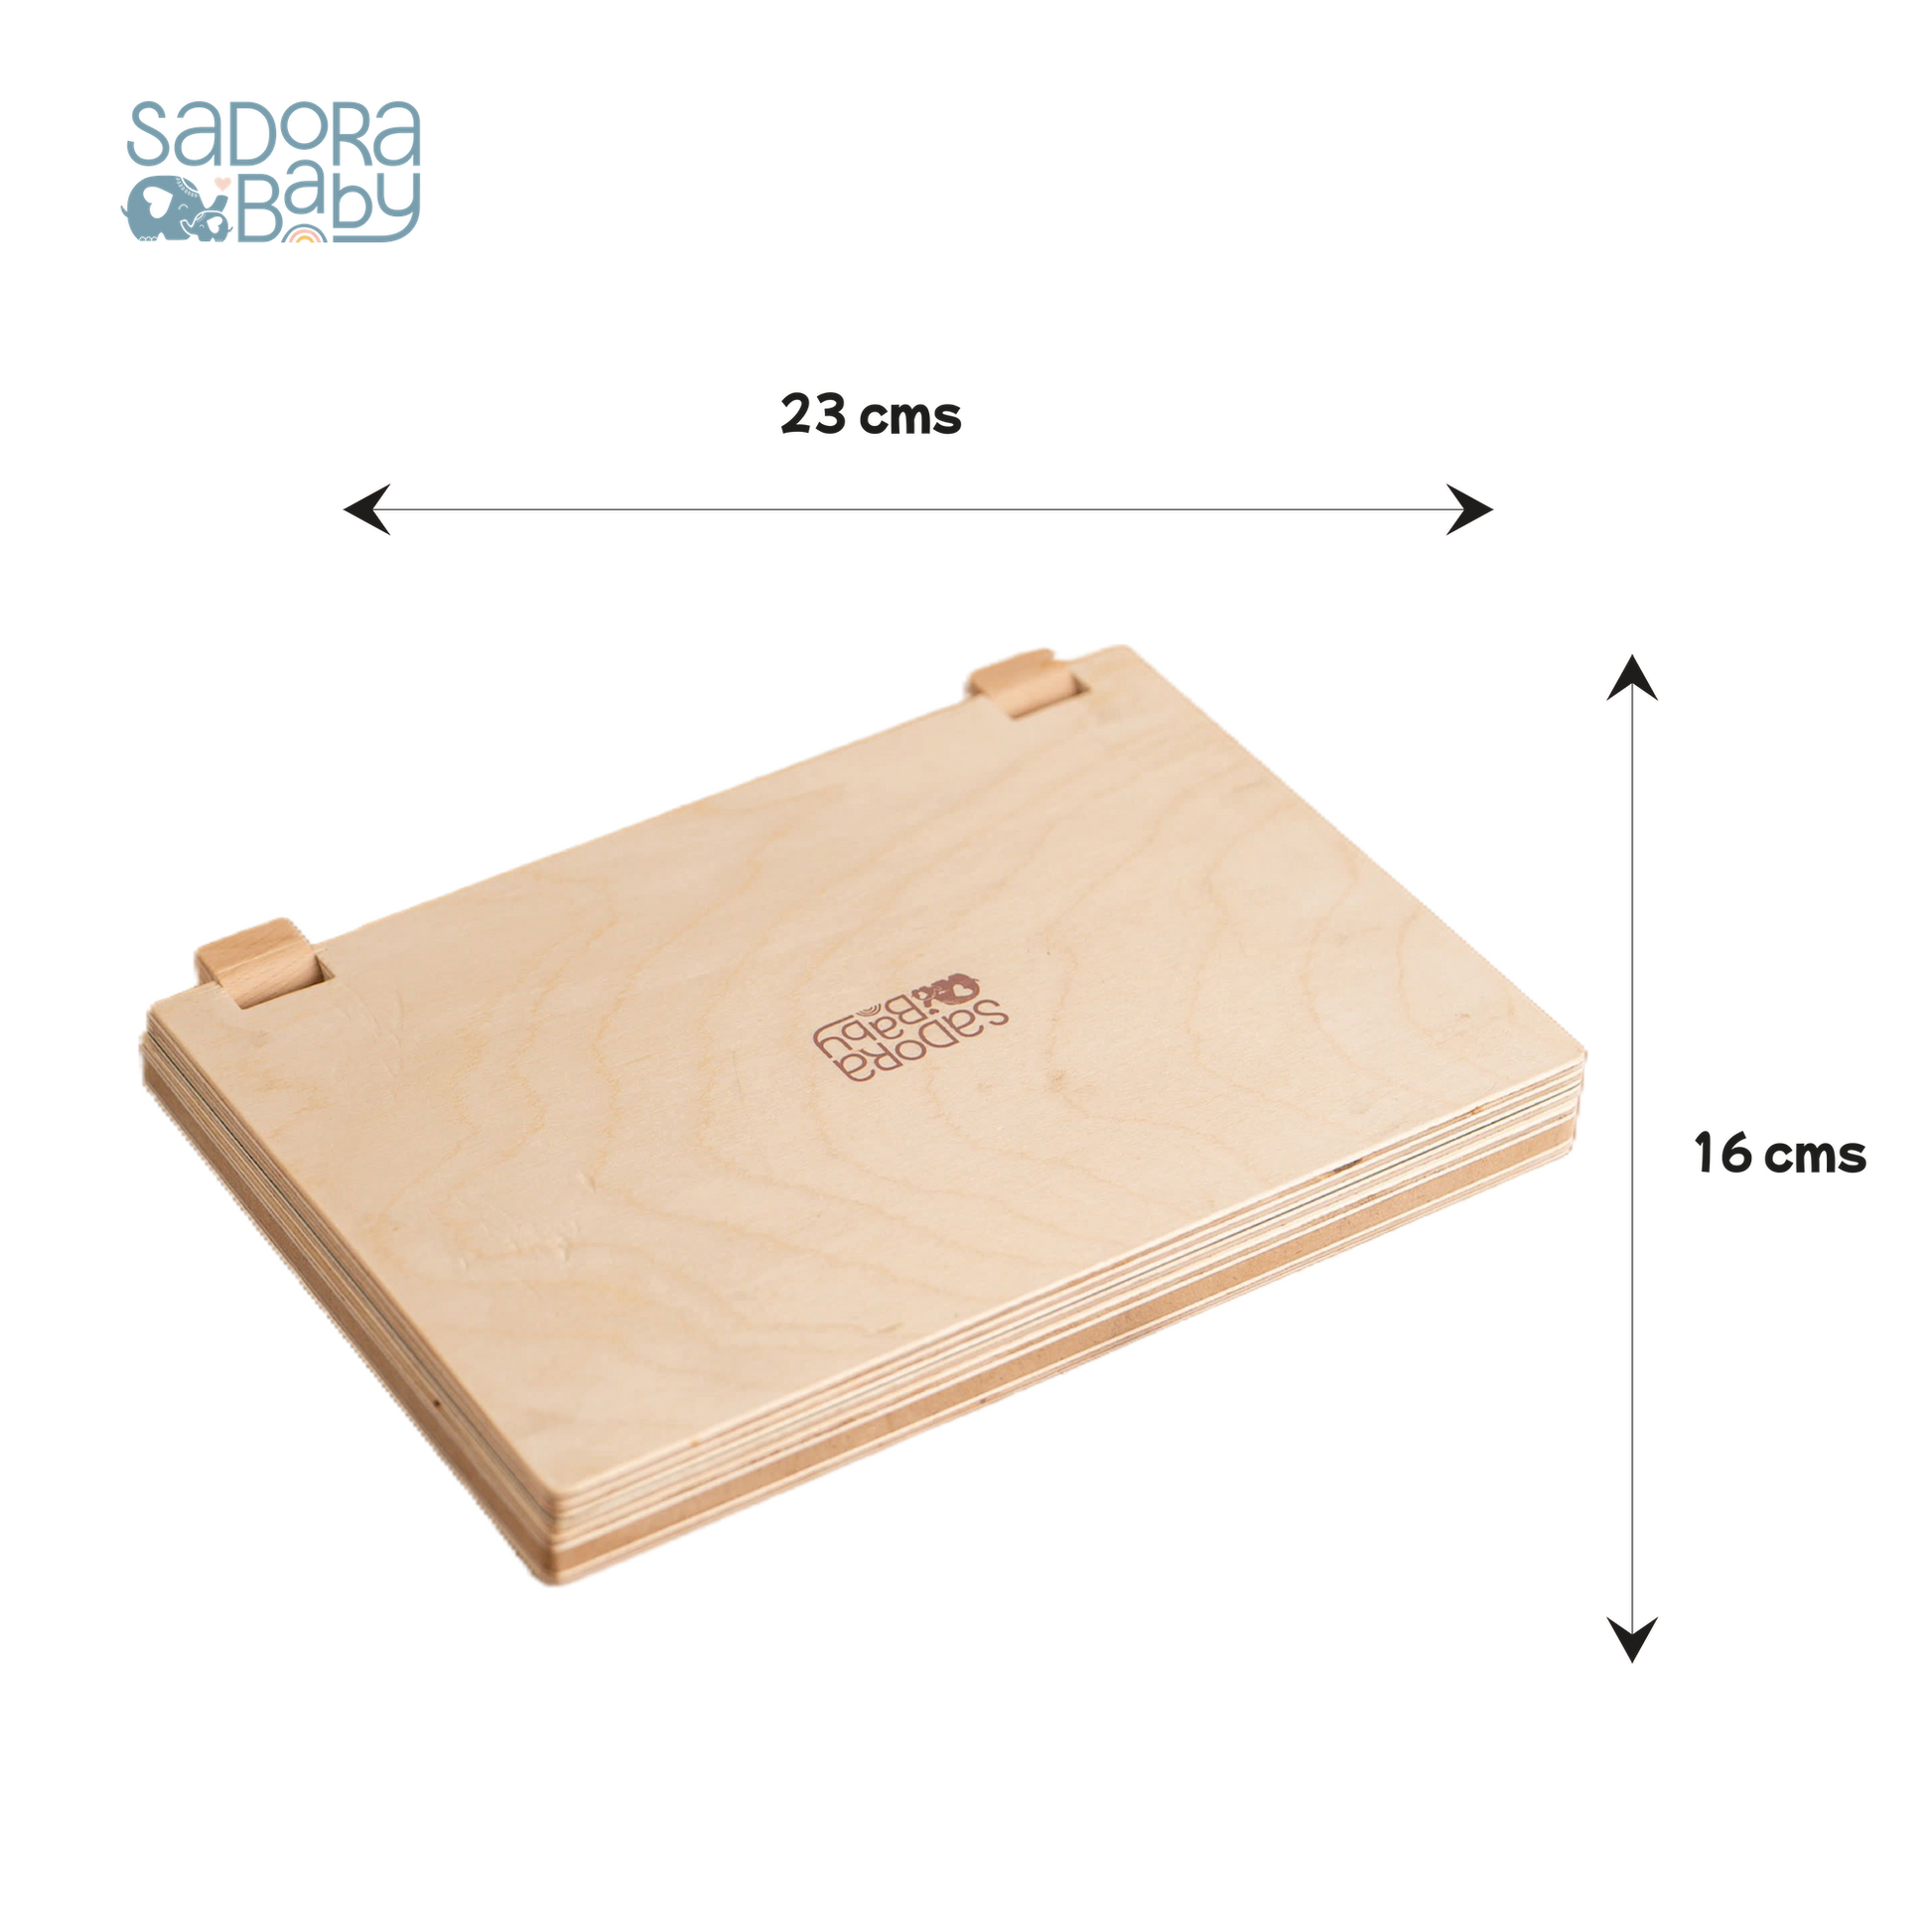 Buy Montessori Wooden Laptop Pretend Play Toy Online - SkilloToys.com